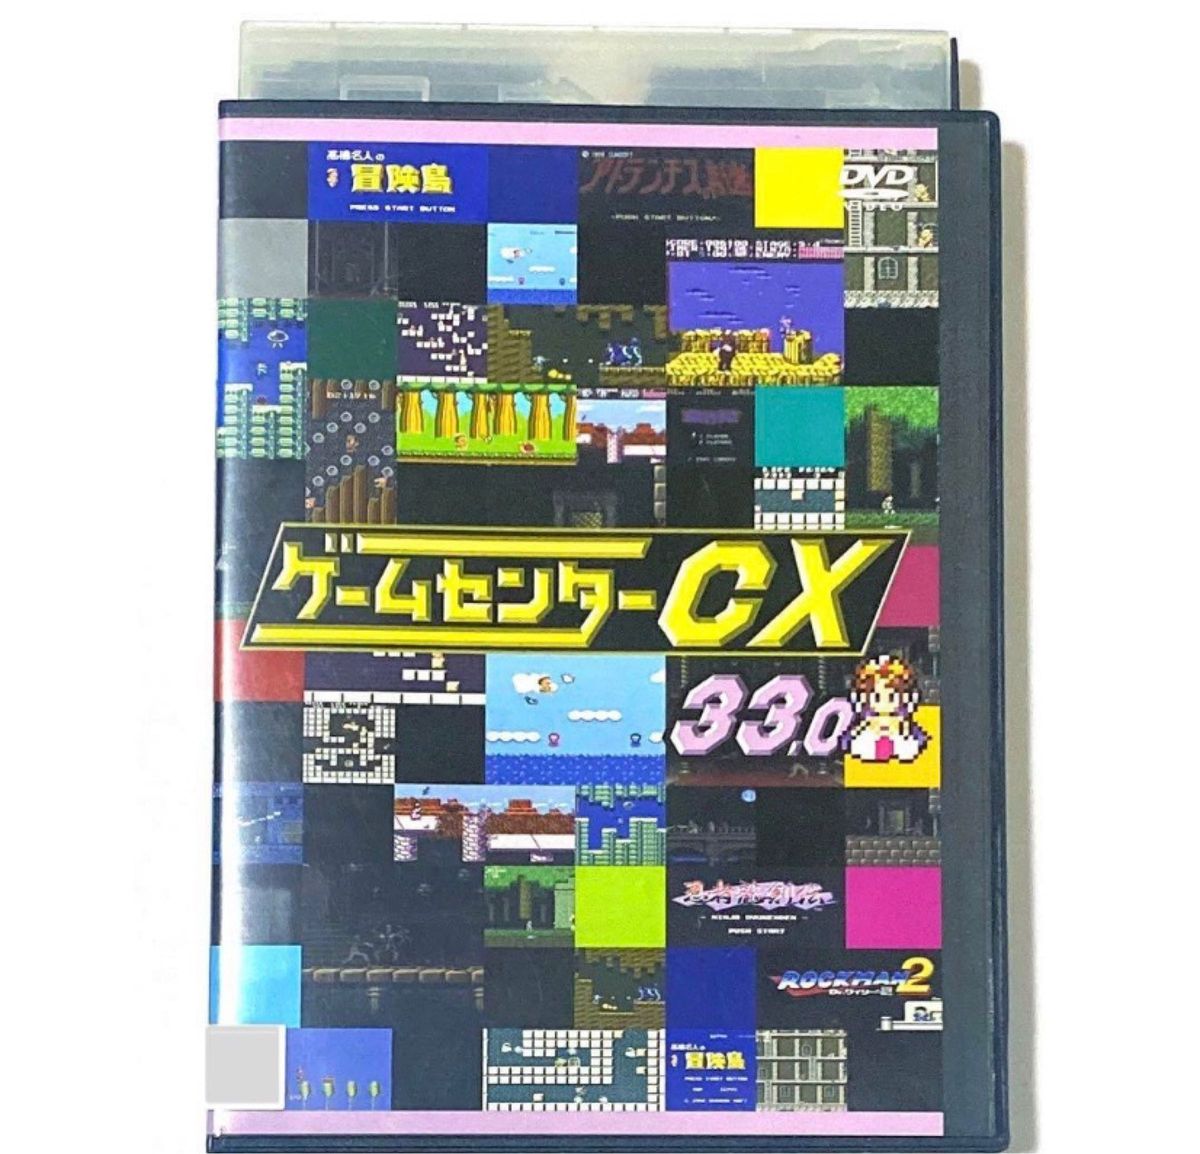 DVD    ゲームセンターCX 33.0